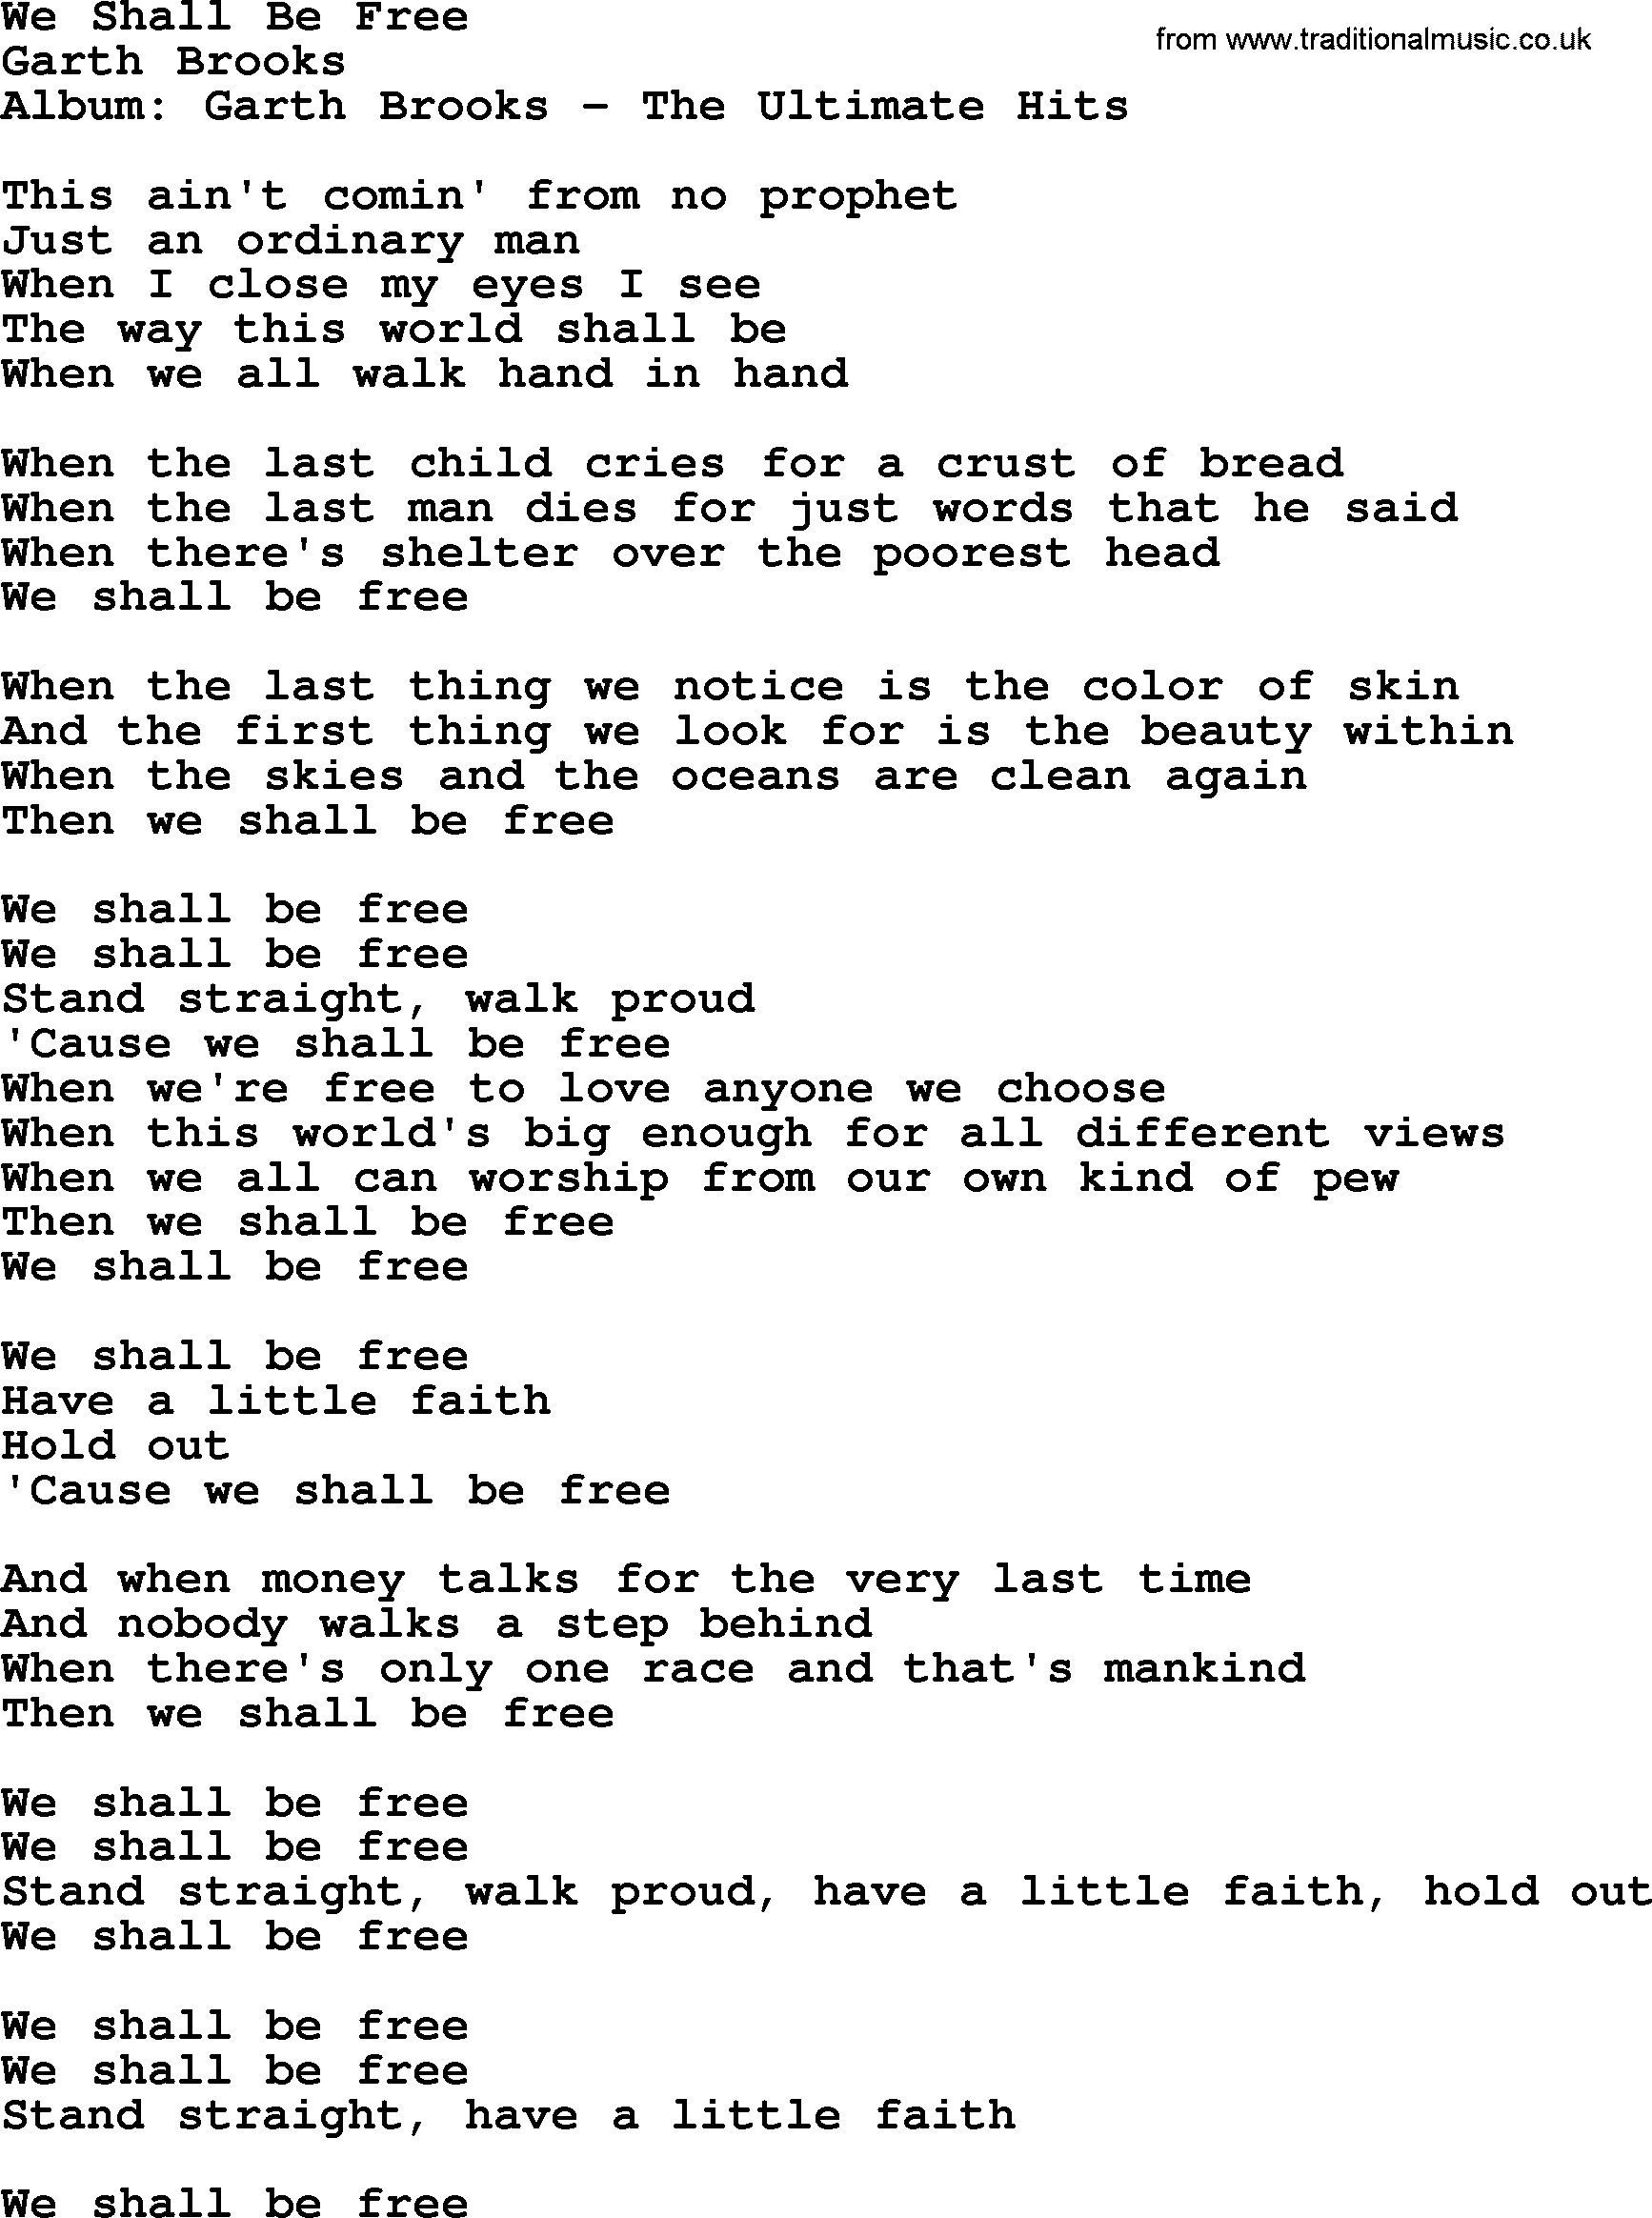 Garth Brooks song: We Shall Be Free, lyrics